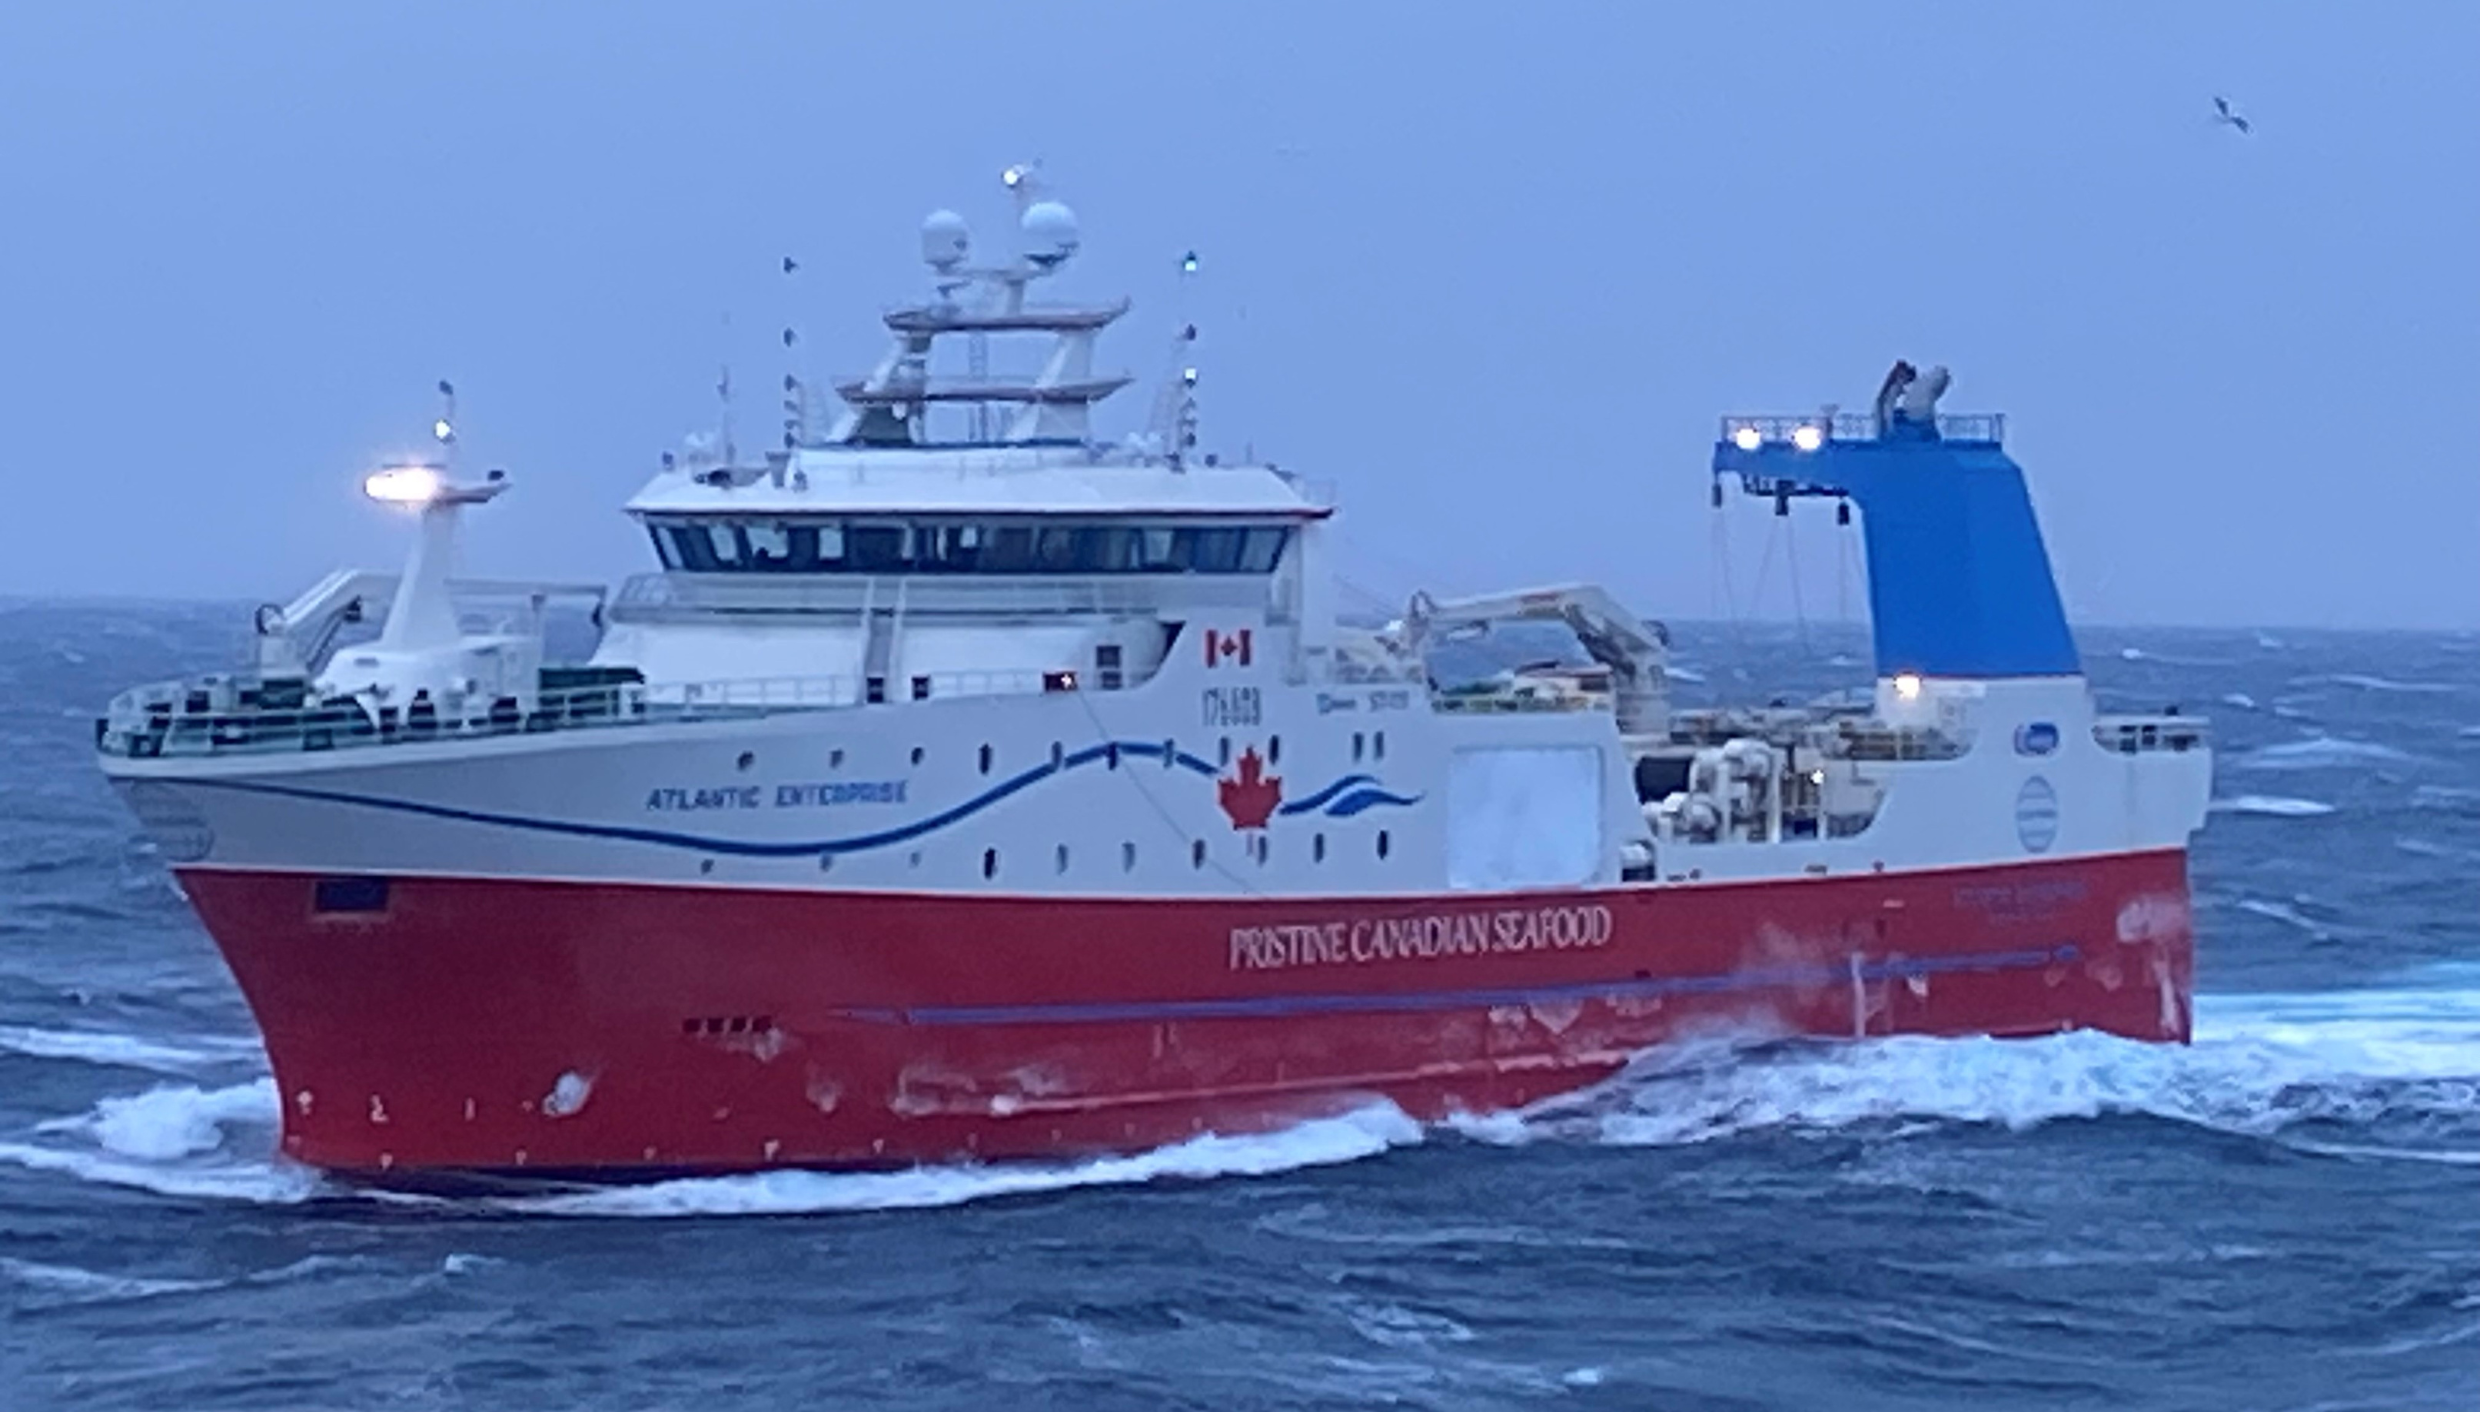 Combi trawler Atlantic Enterprise